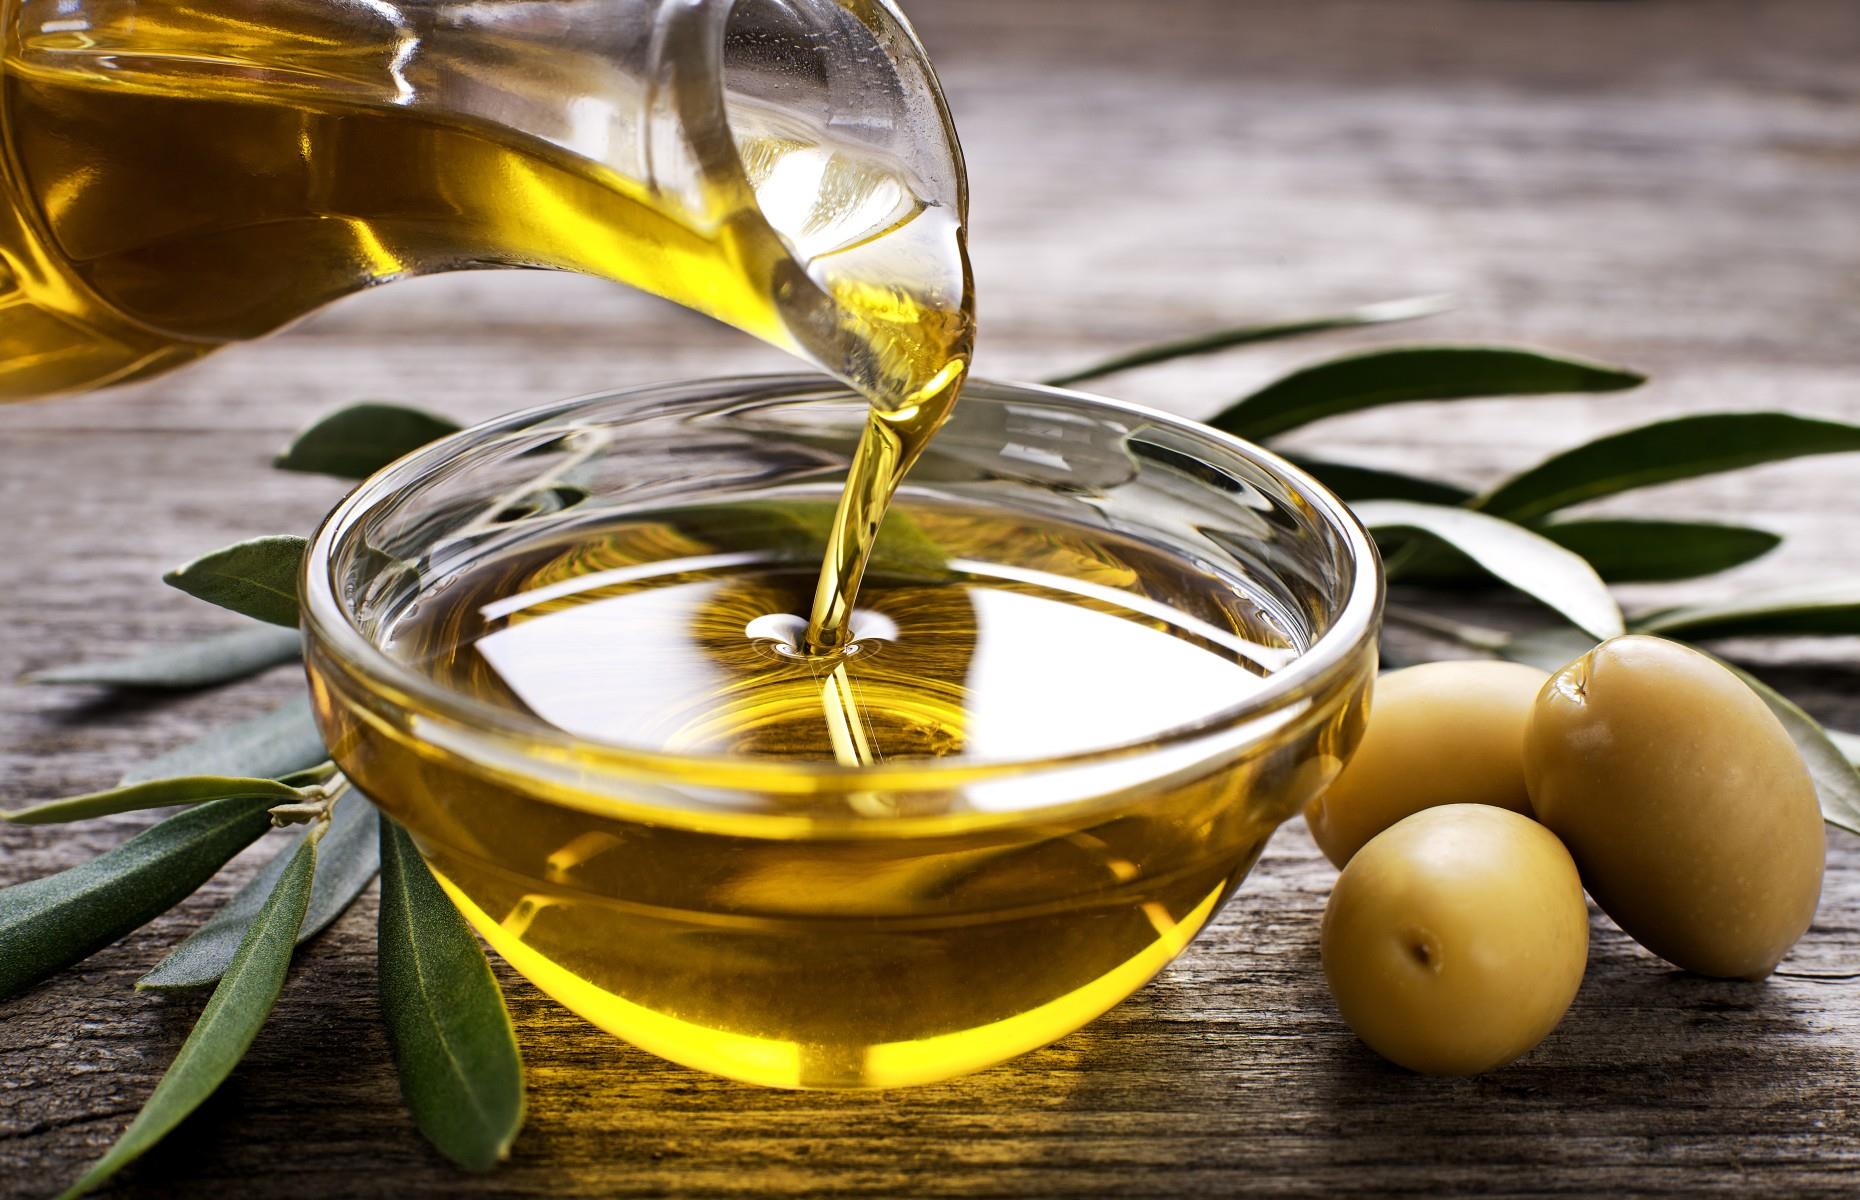 Global: Olive oil